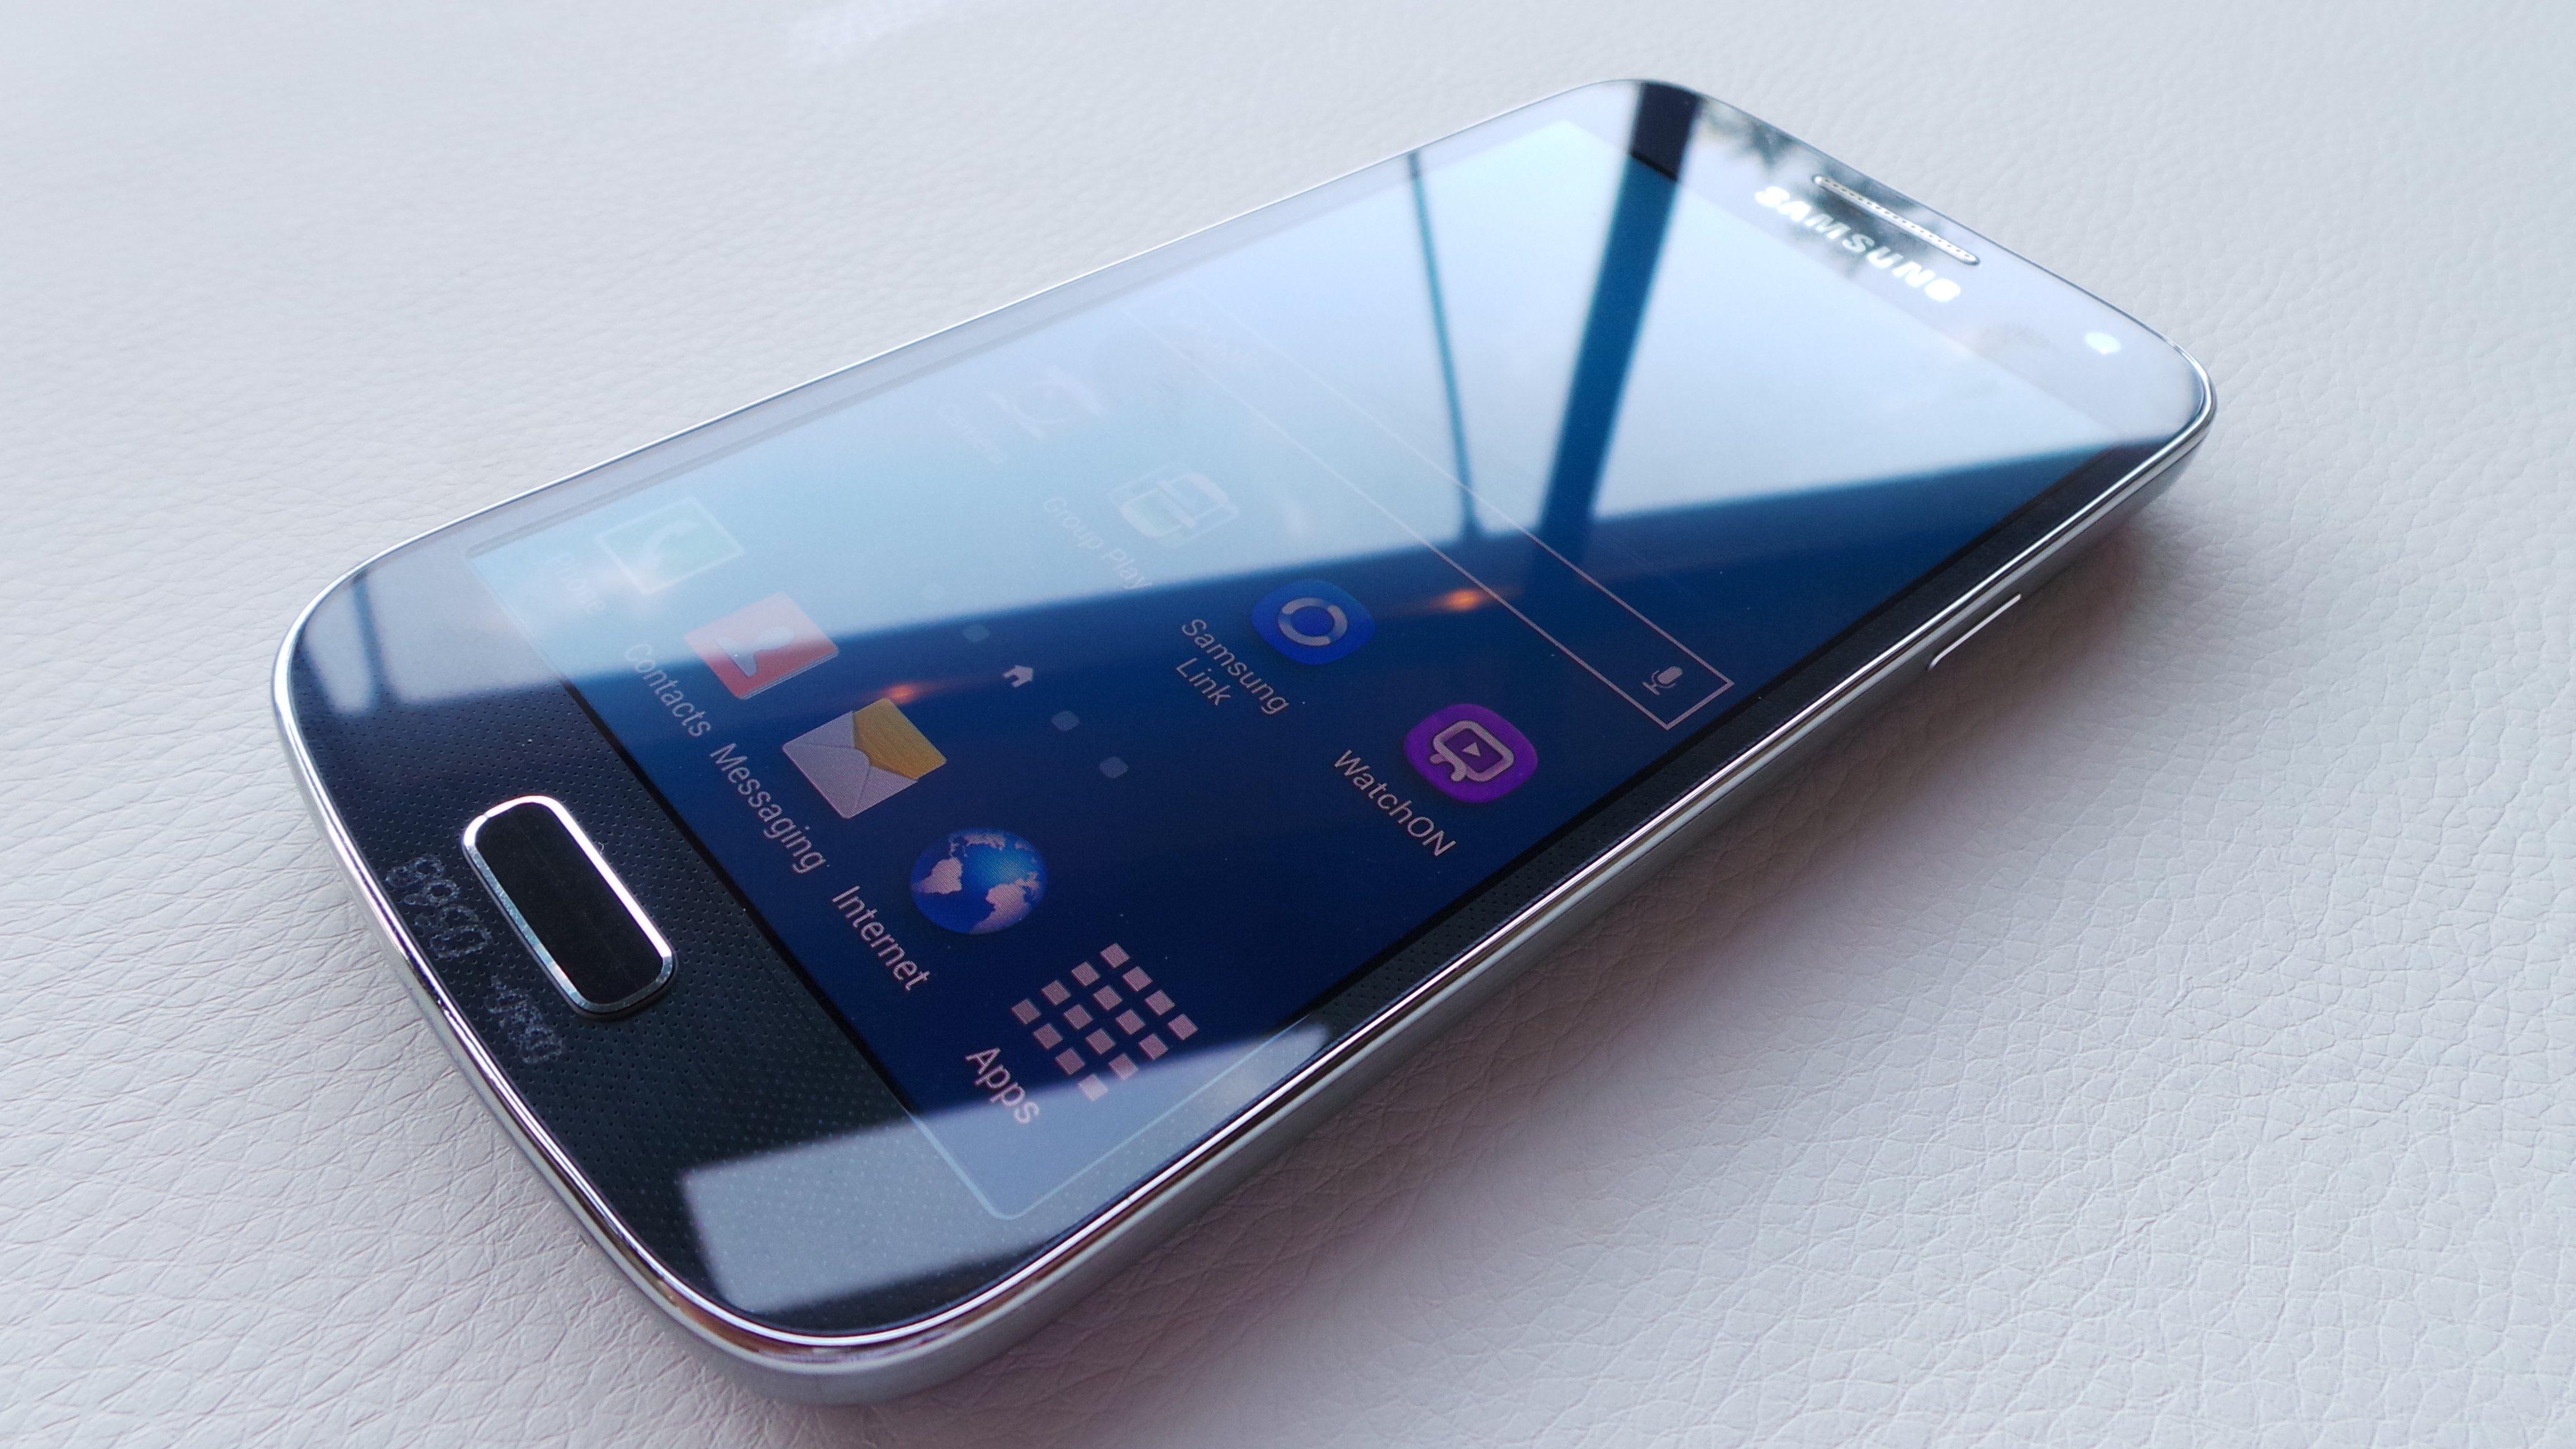 Samsung Galaxy S4 Mini sistema Android 